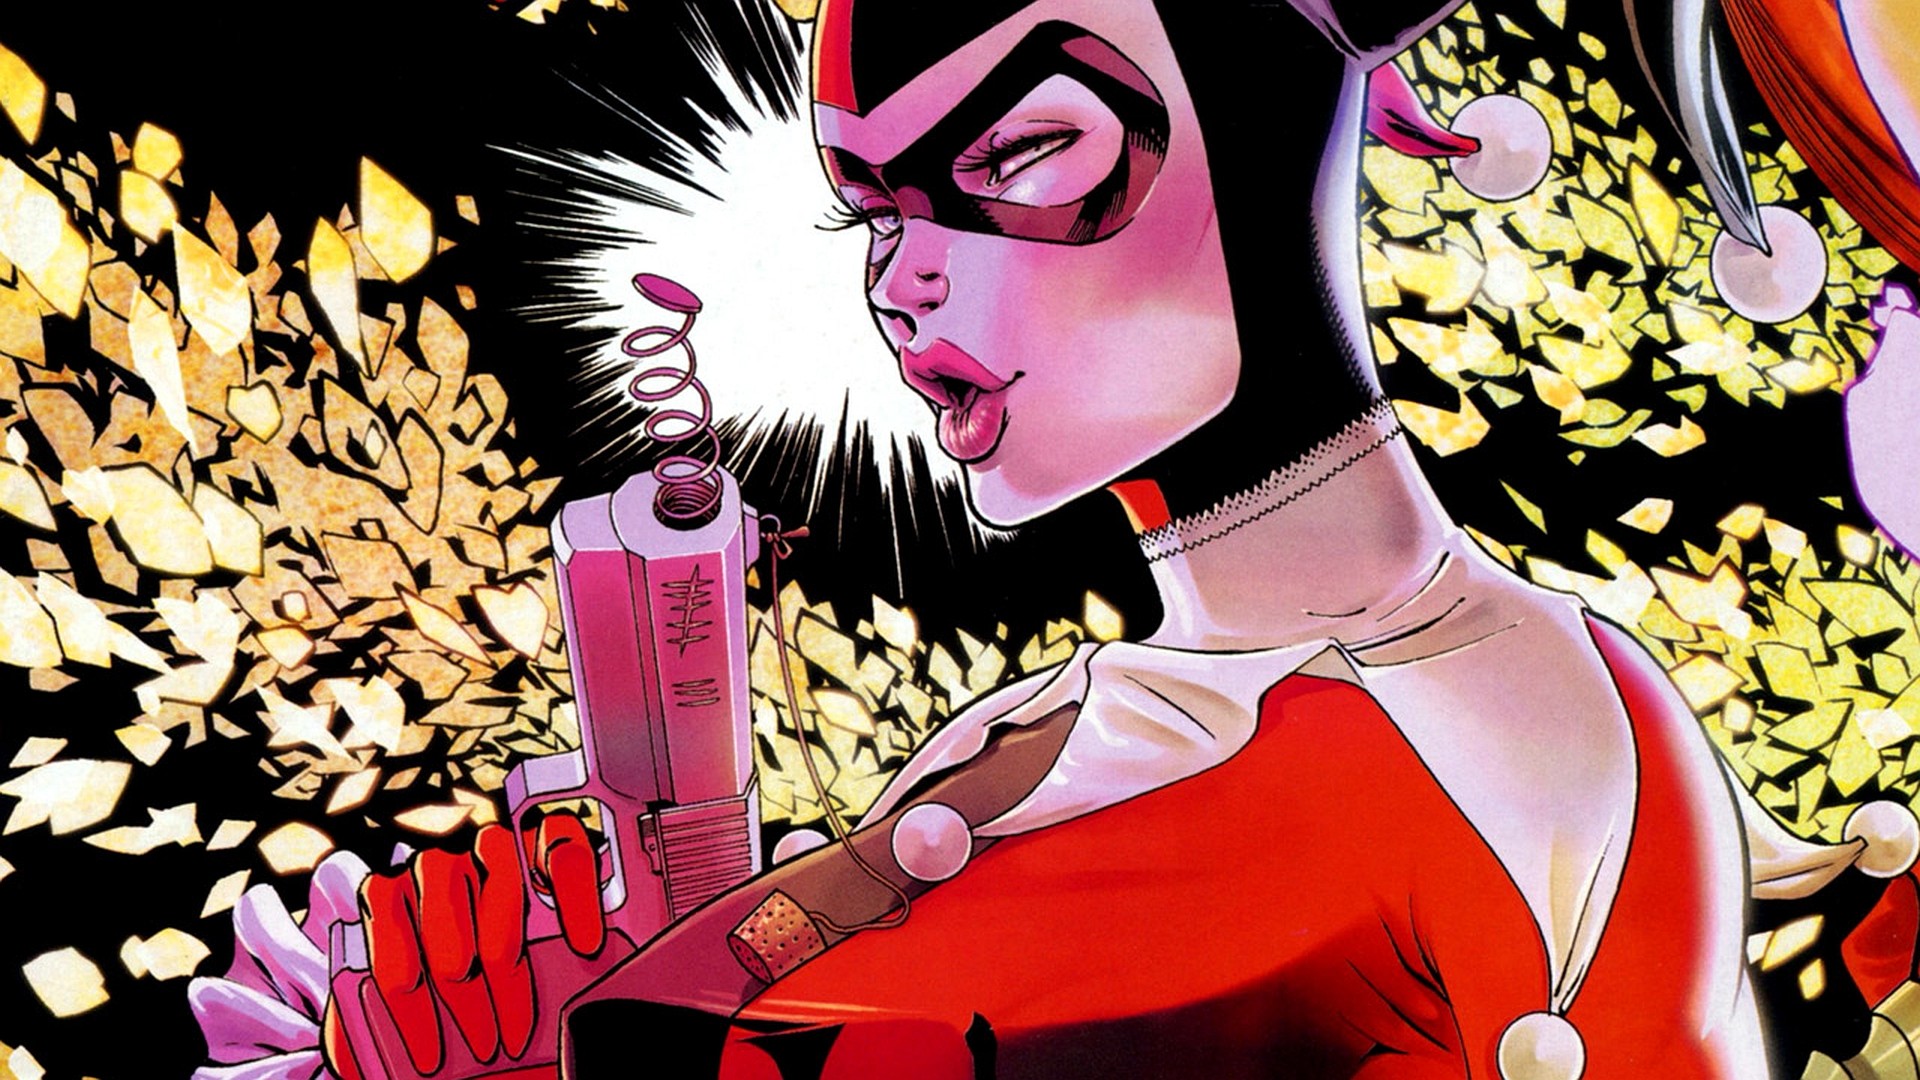 General 1920x1080 Harley Quinn DC Comics Batman gun fantasy girl villains girls with guns mask women comic art comics